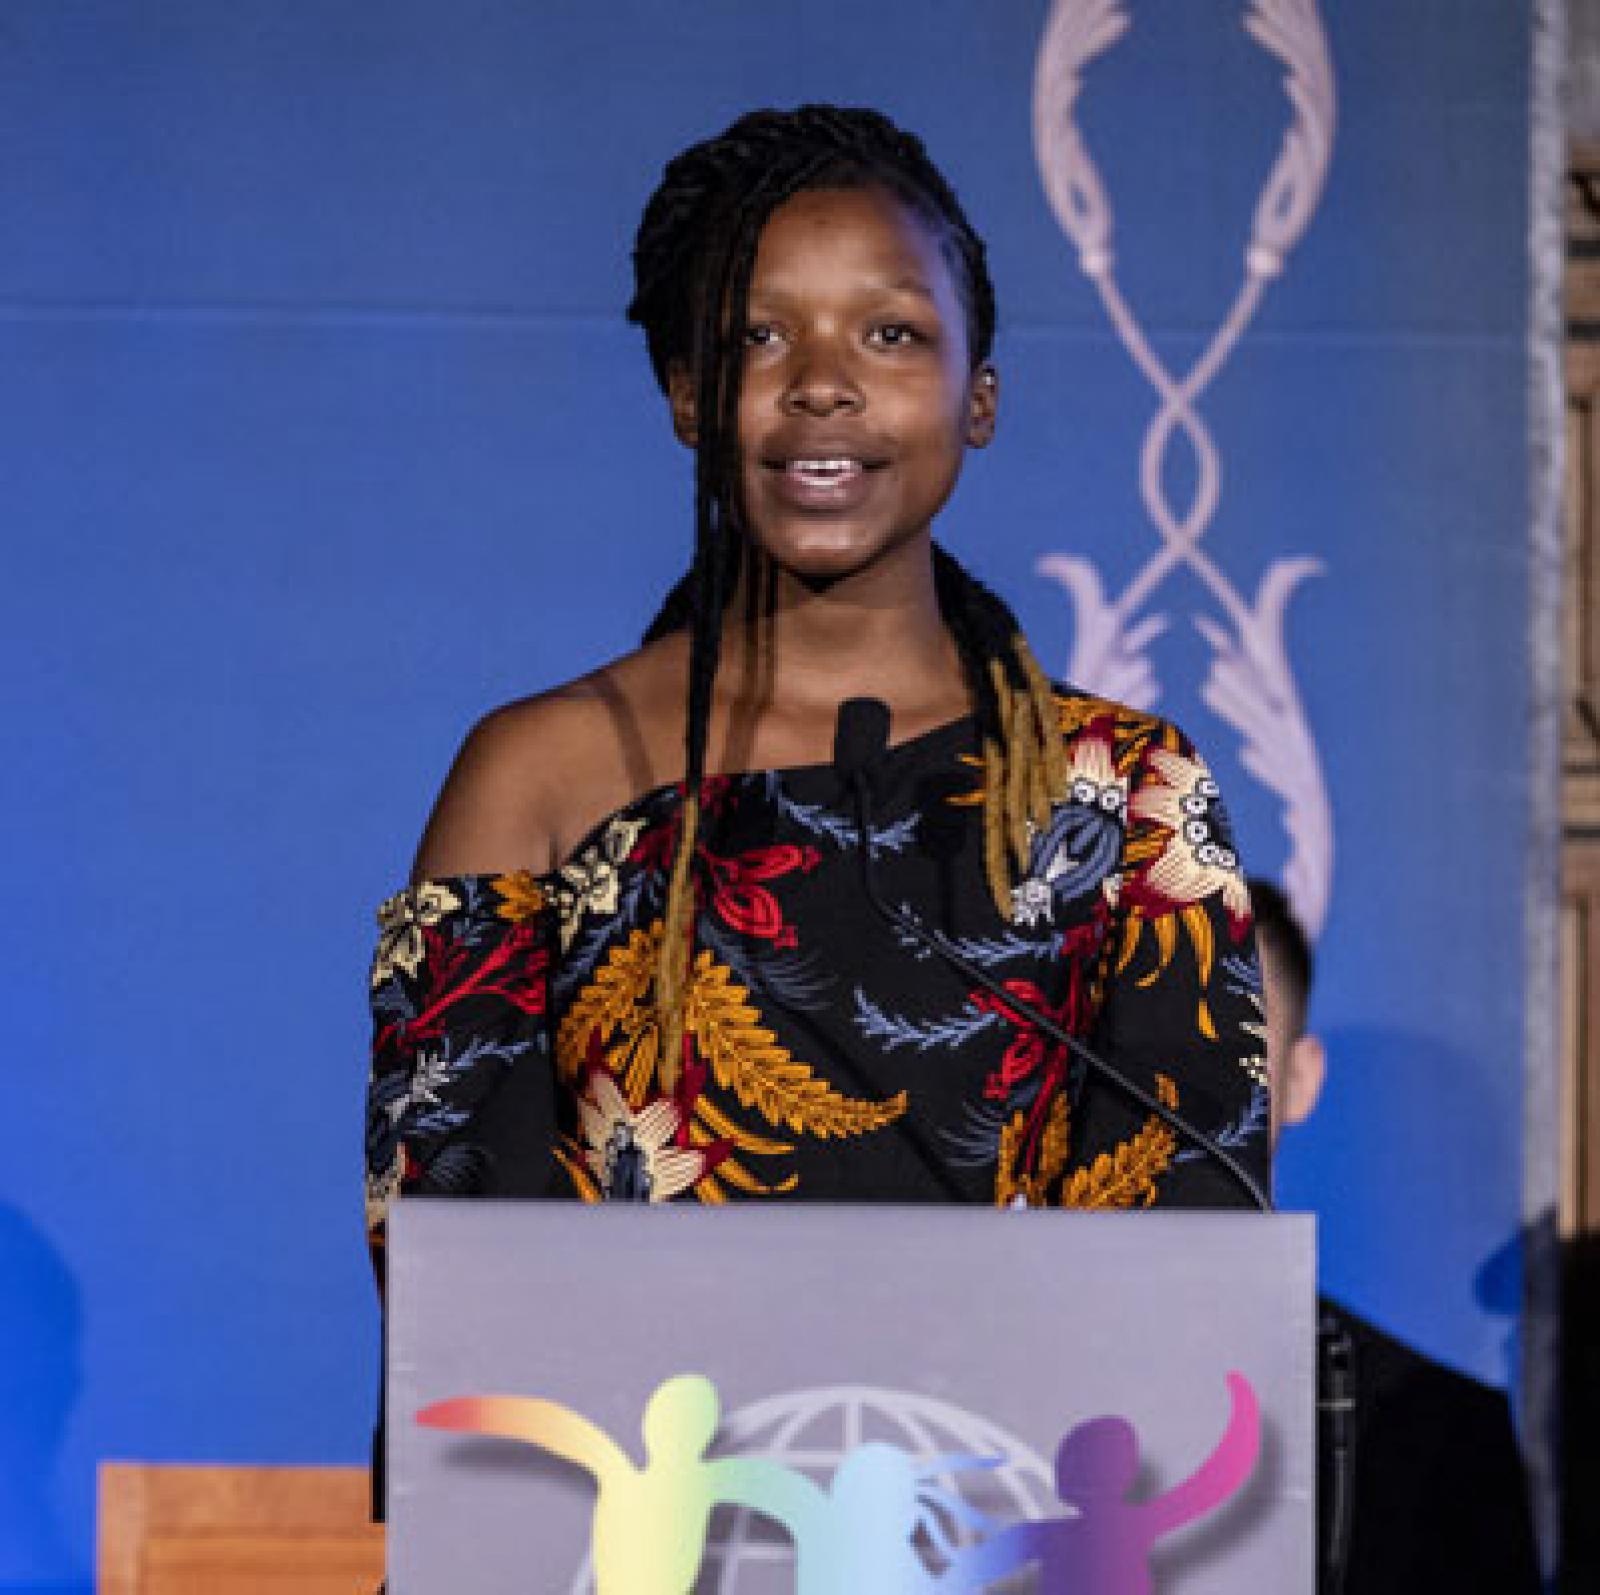 African girl speaks at podium. 